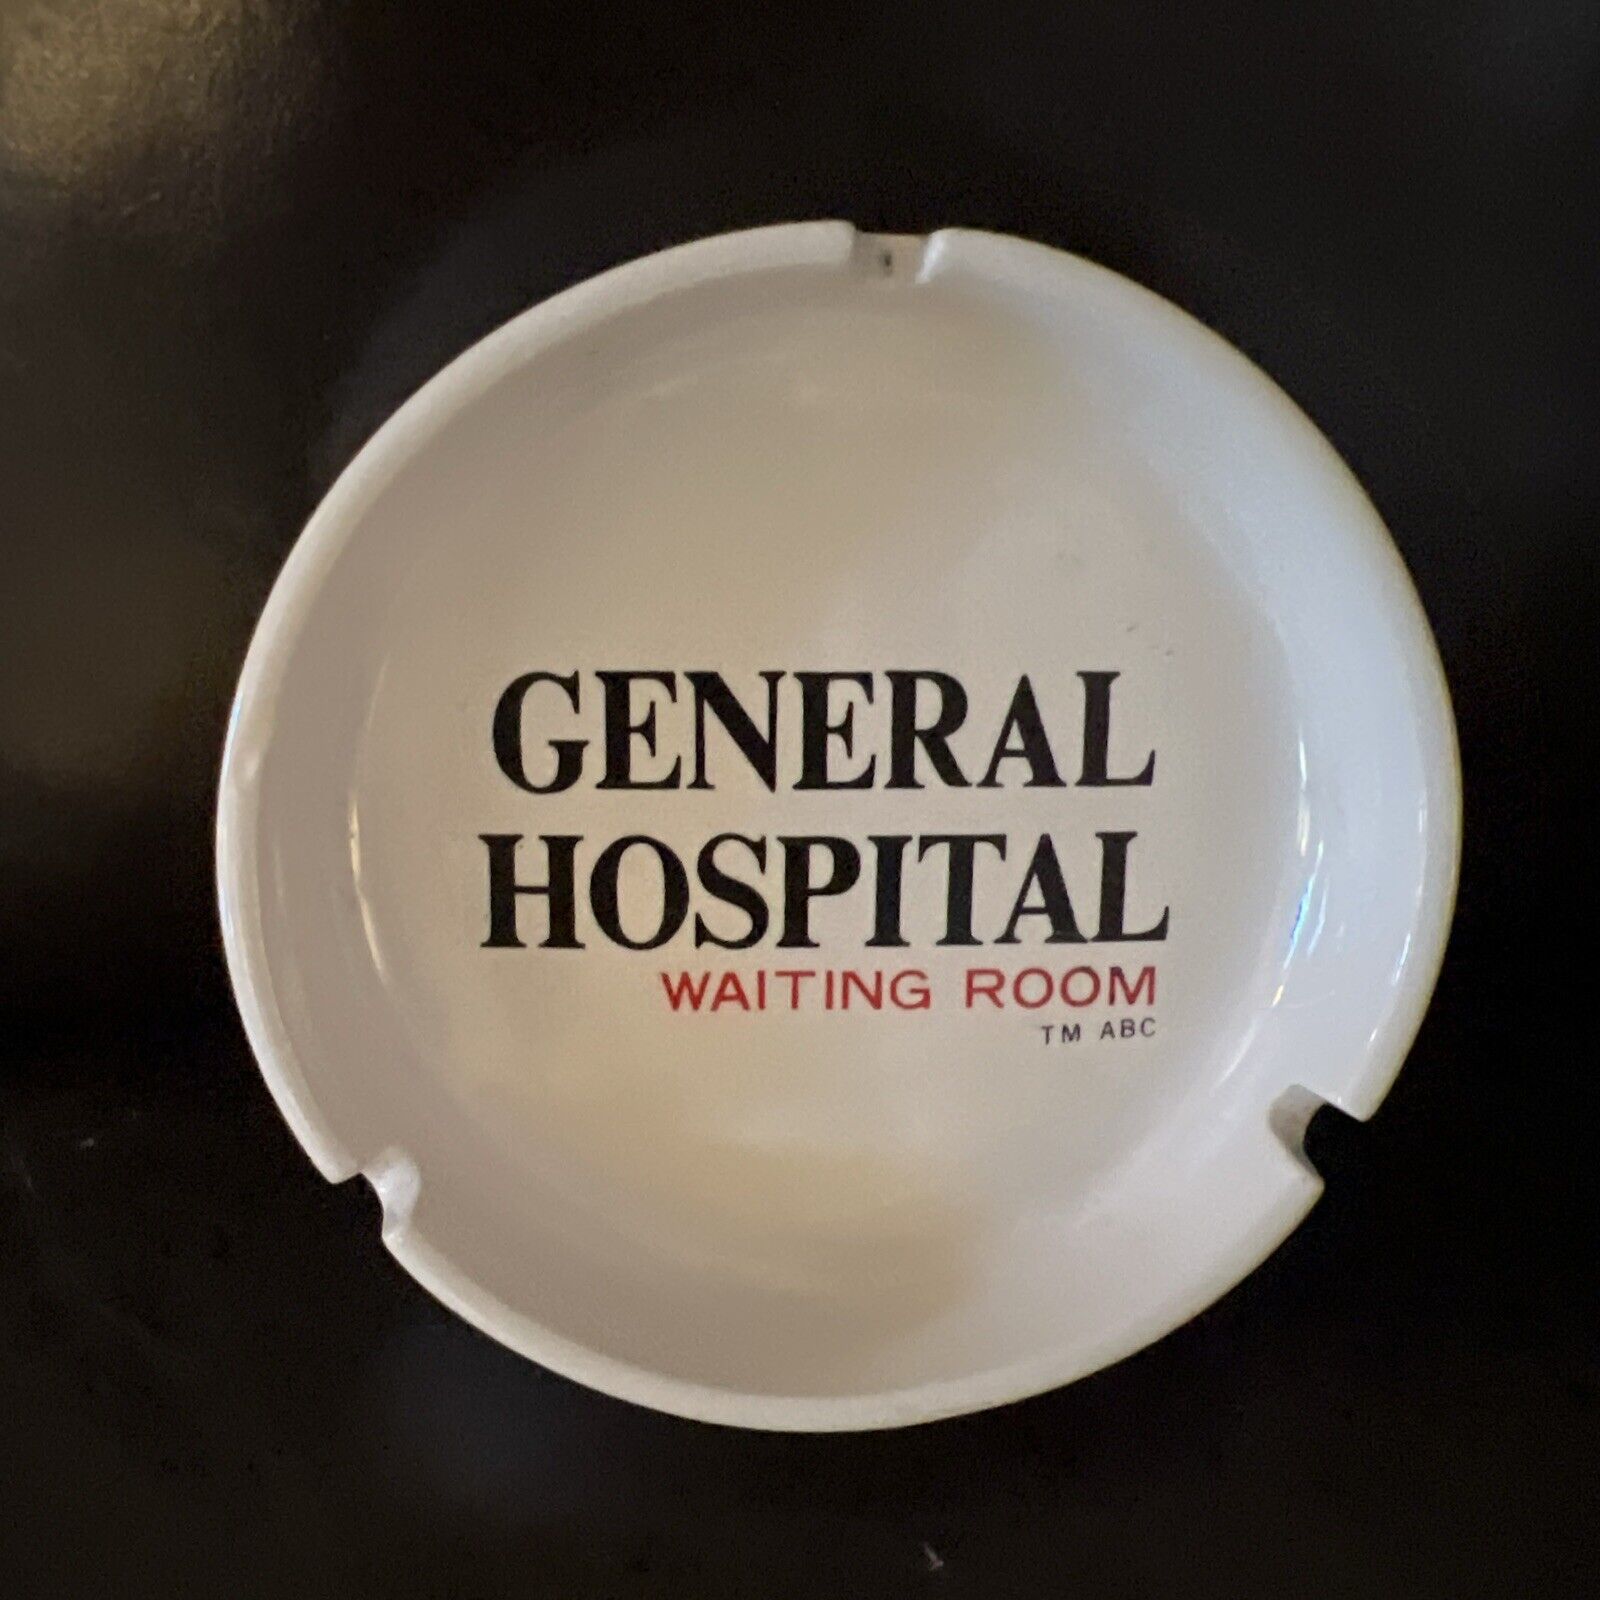 Vintage 1980’s General Hospital Waiting Room Ashtray TV Show ABC Soap Opera